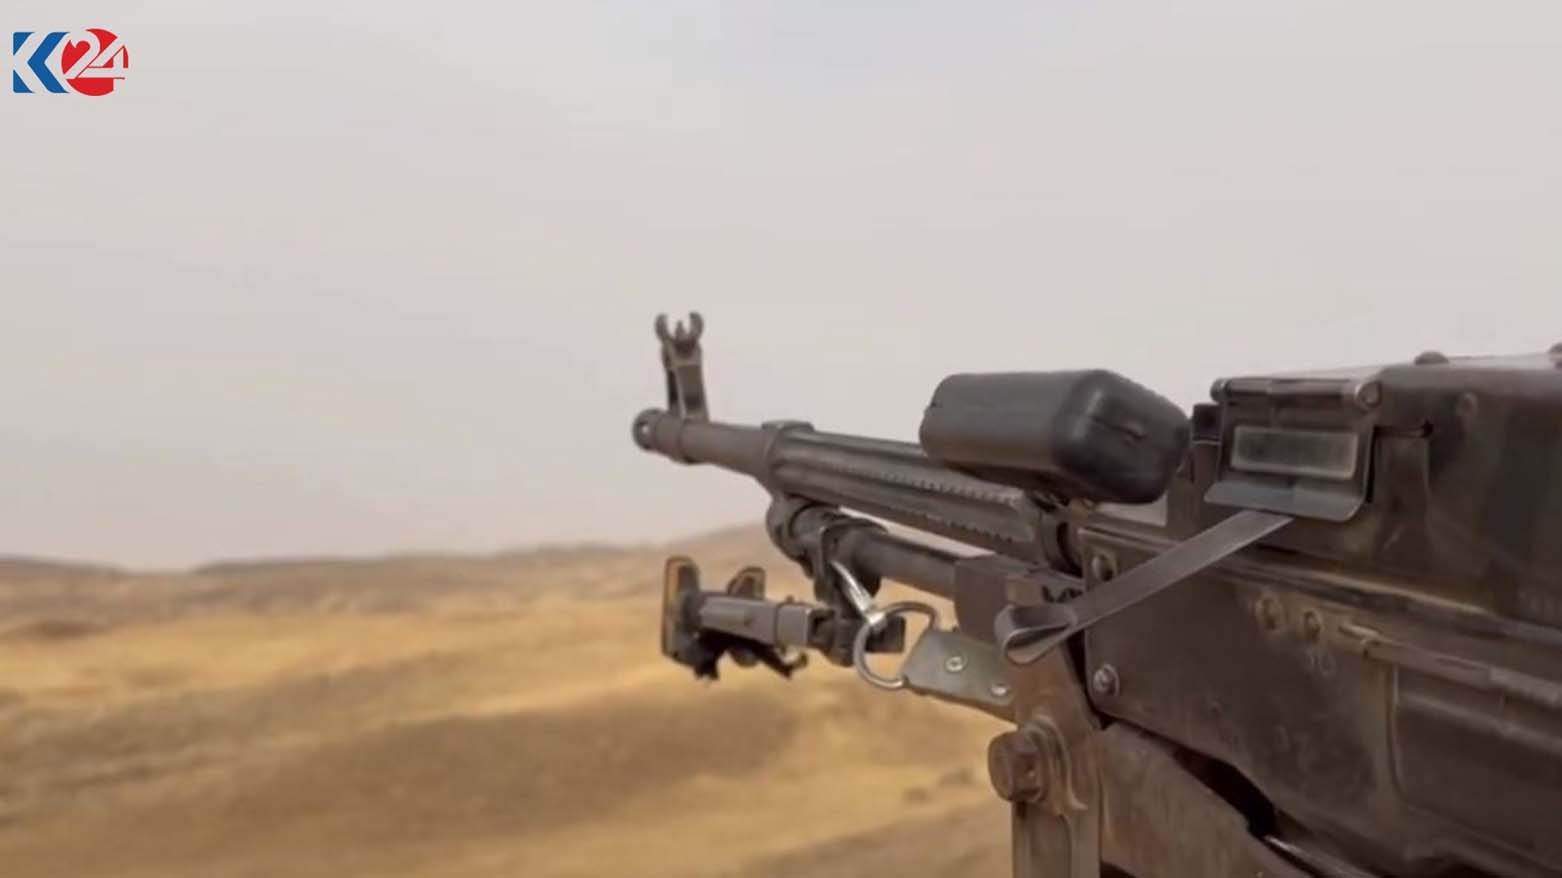 Coordinated Efforts Between Peshmerga and Iraqi Army Reduce ISIS Threat in Kirkuk Region